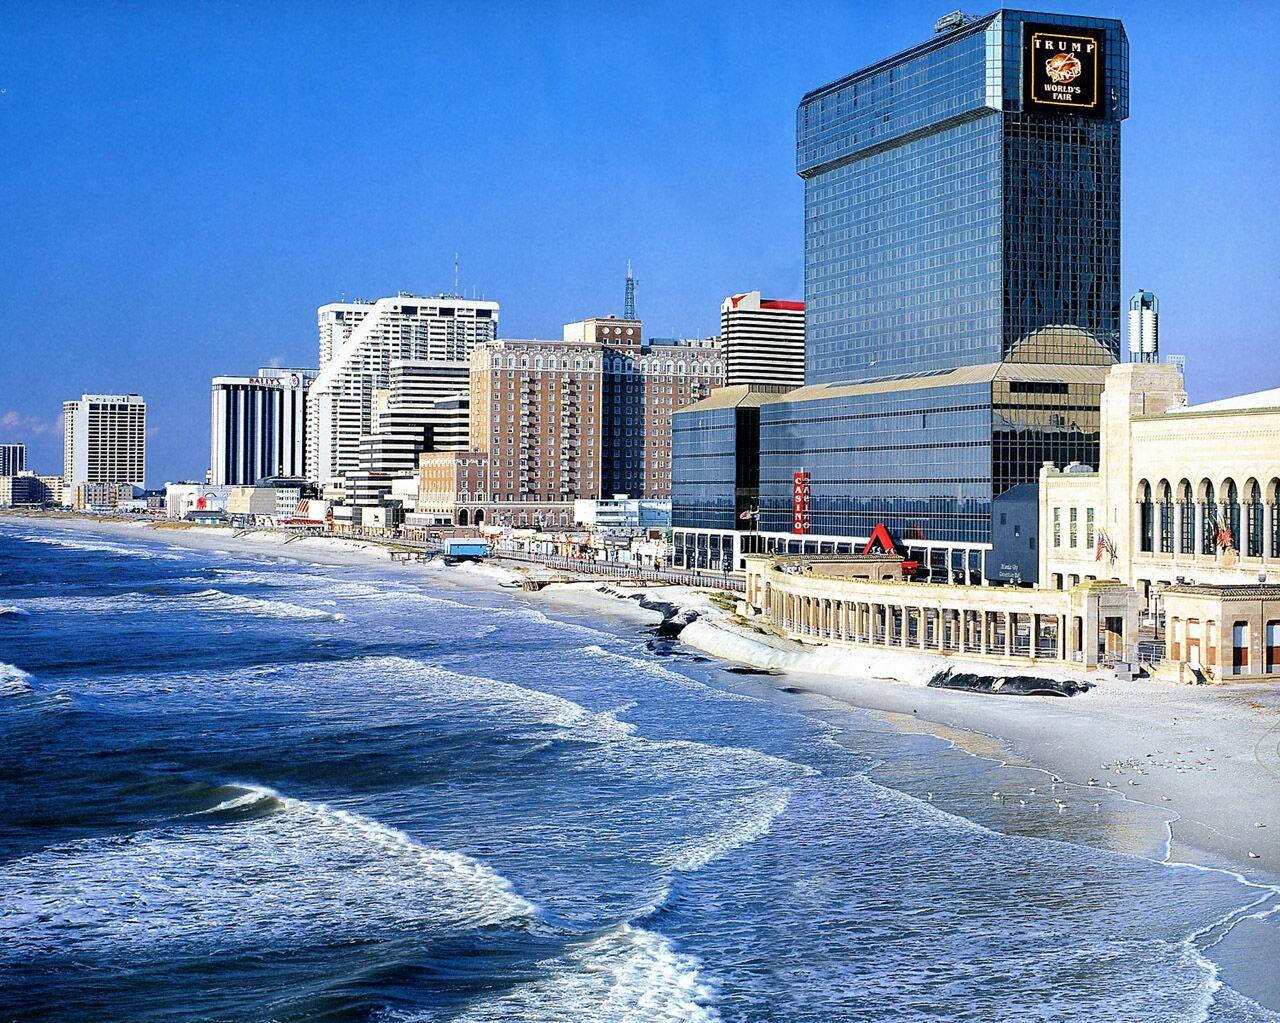 Tropicanaatlantic City Hotel New Jersey - Tropicana Atlantic City-hotell New Jersey Wallpaper